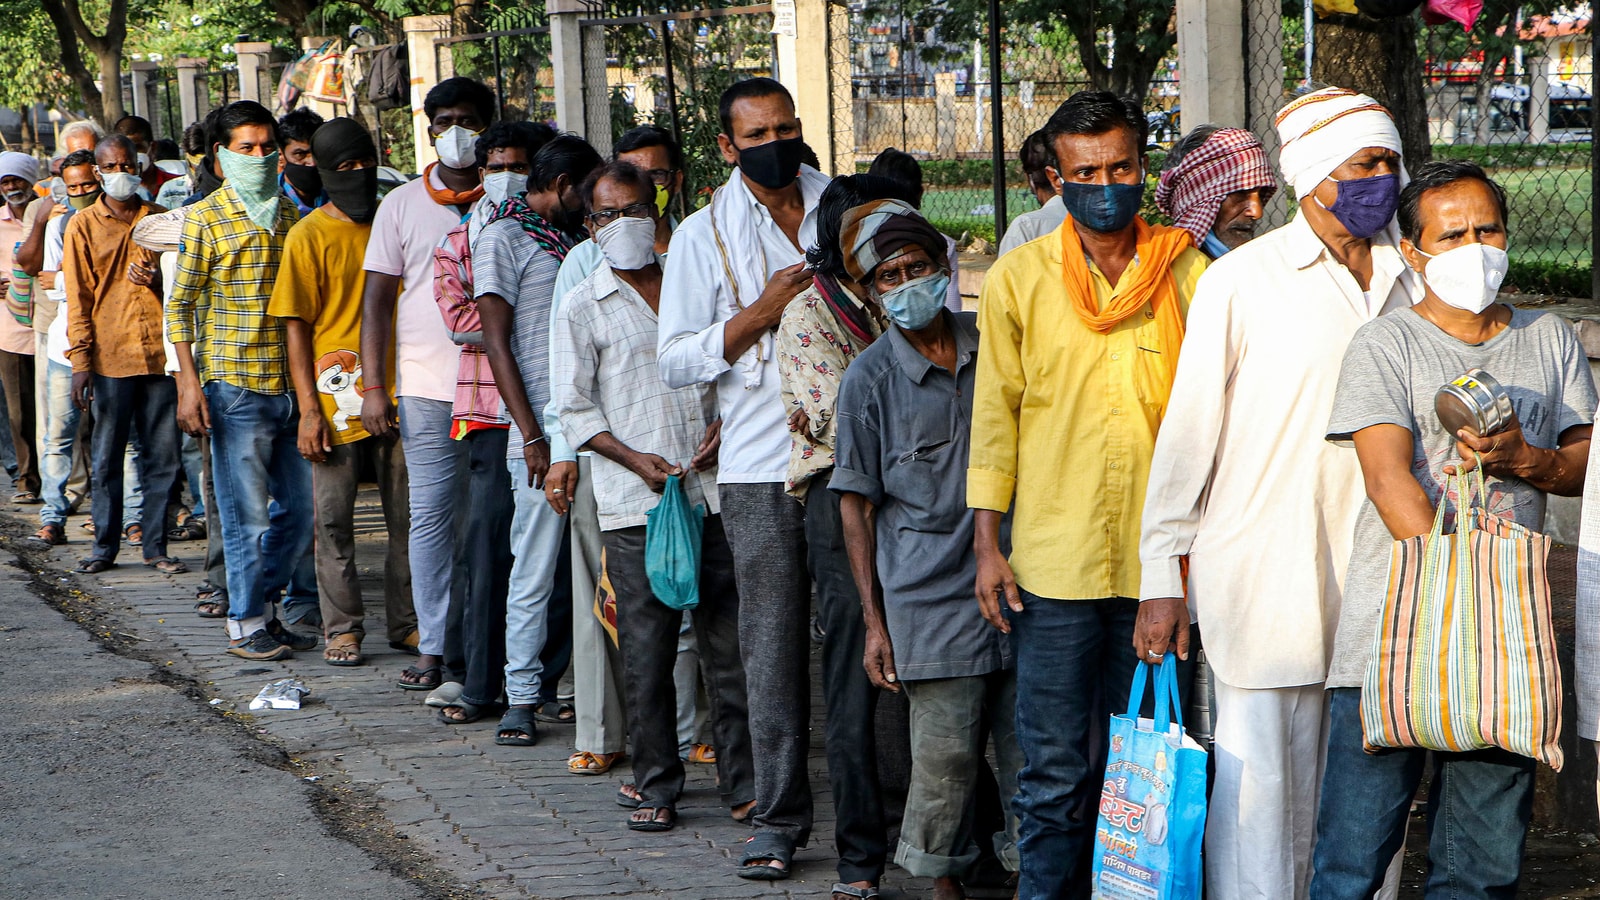 "Government Mandates Face Masks as Covid Sub-Variant JN.1 Raises Concerns in Neighboring Kerala"